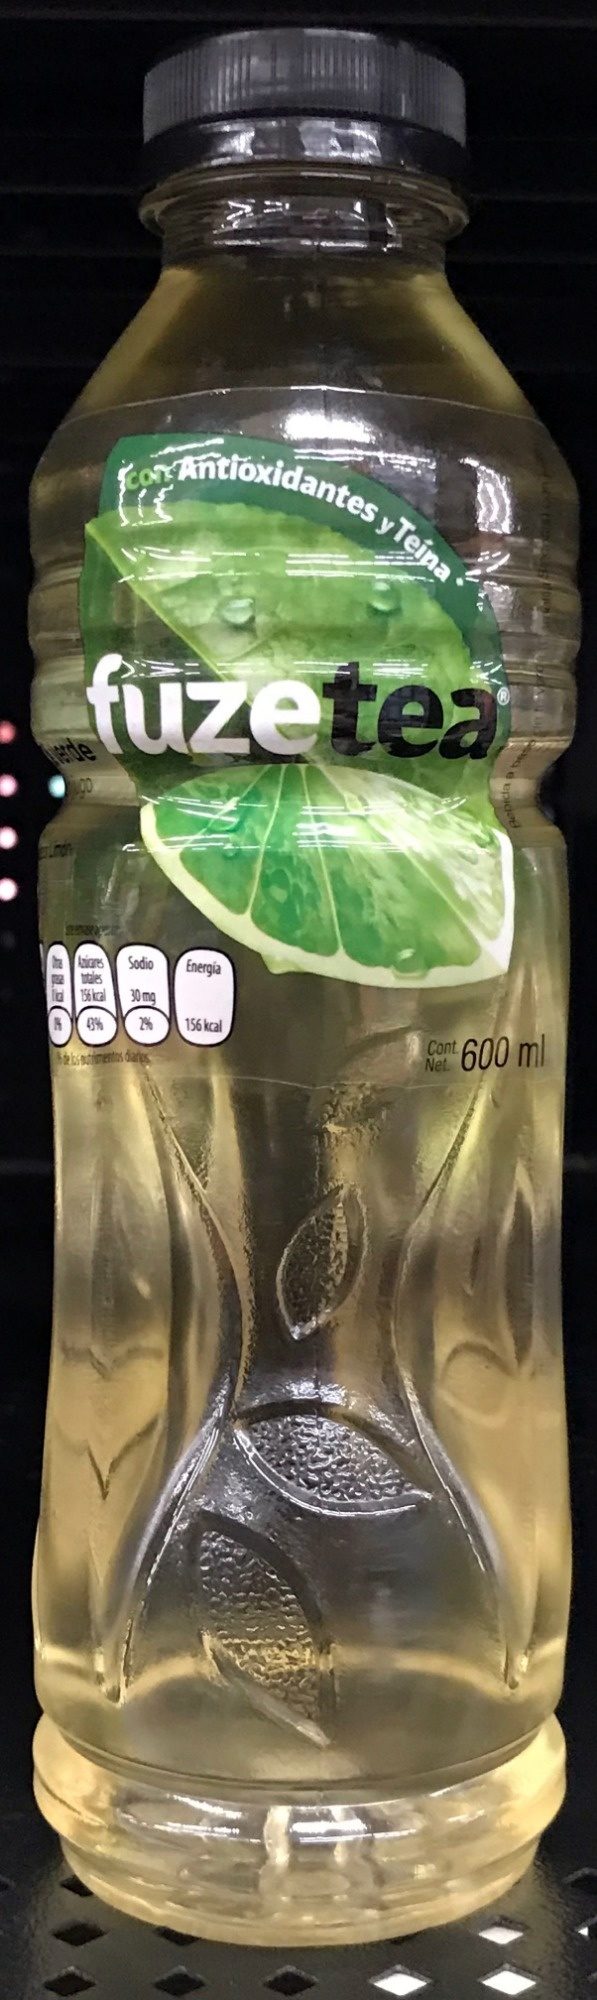 Fuze Tea Sabor Limón - Product - es